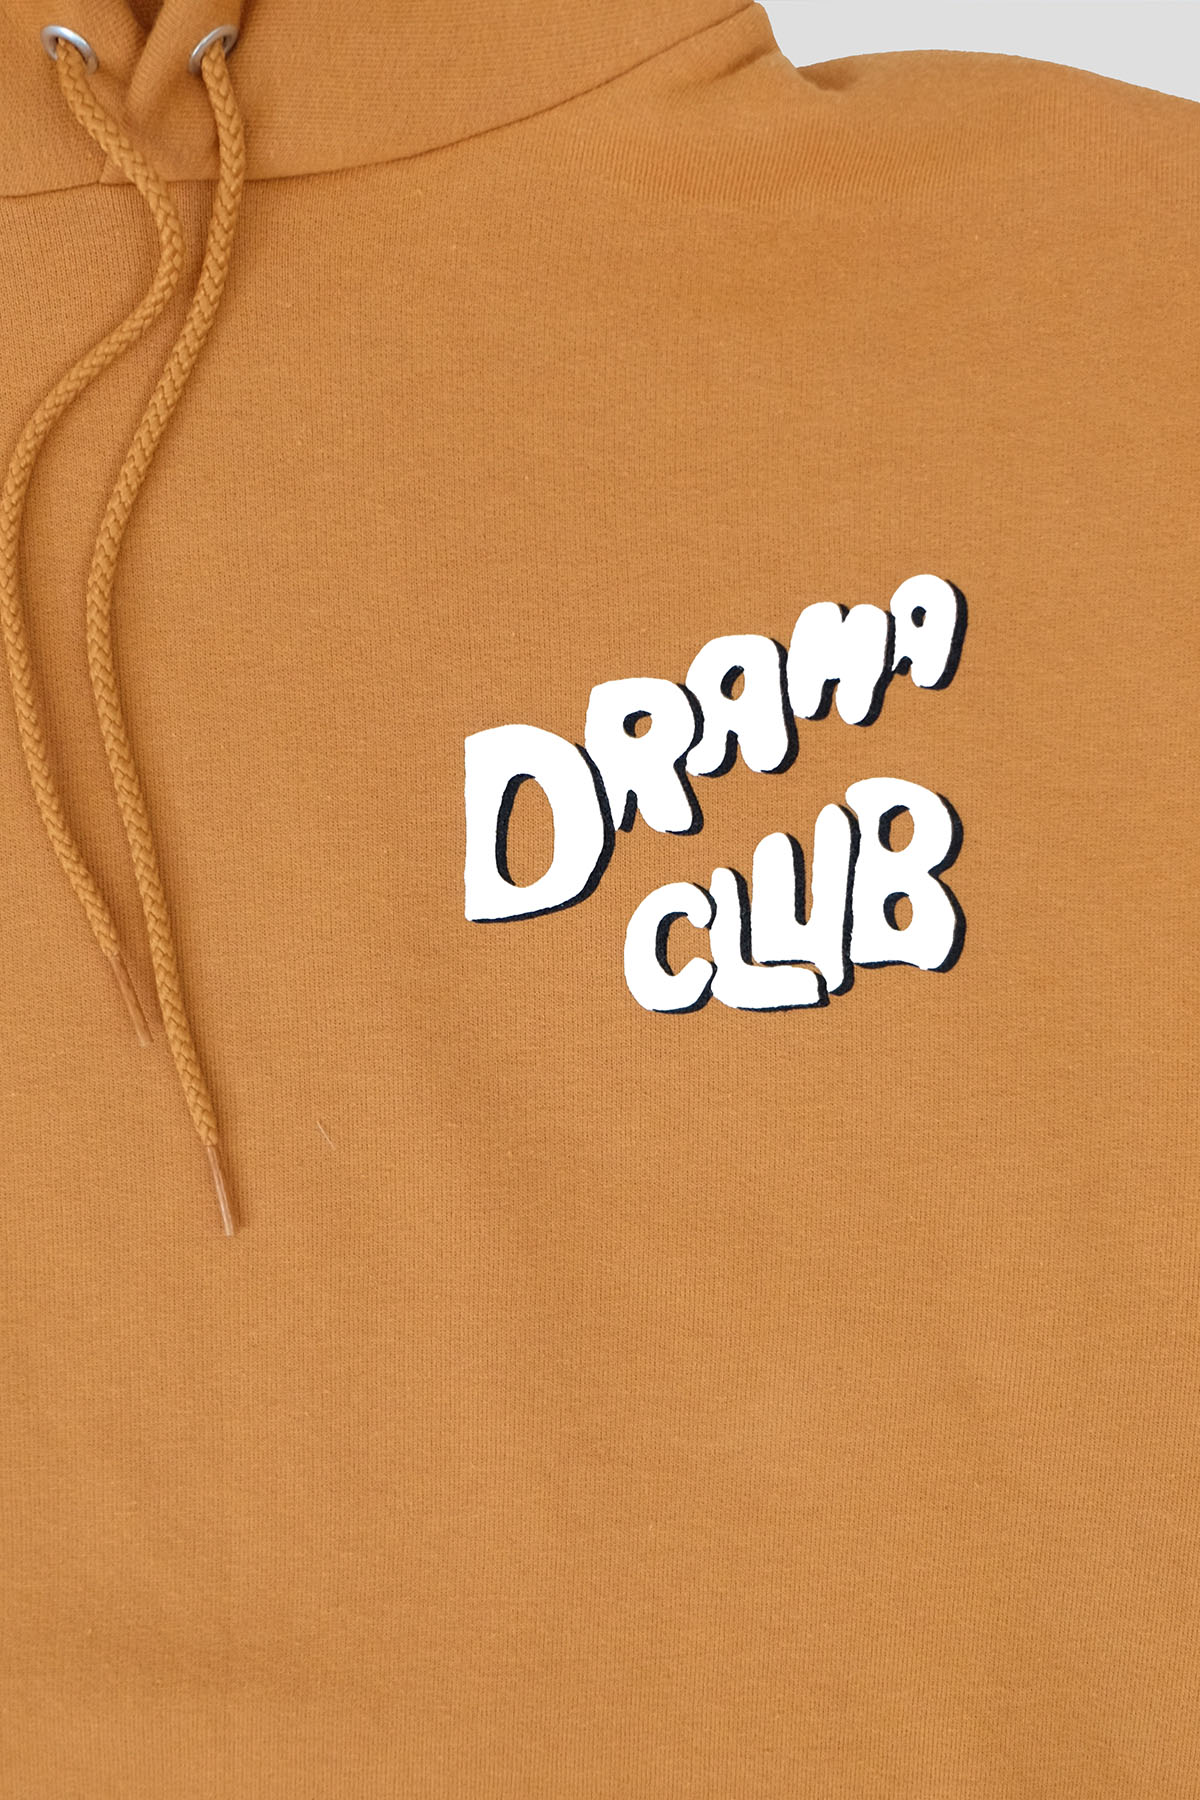 Study Hall Drama Club Sweatshirt